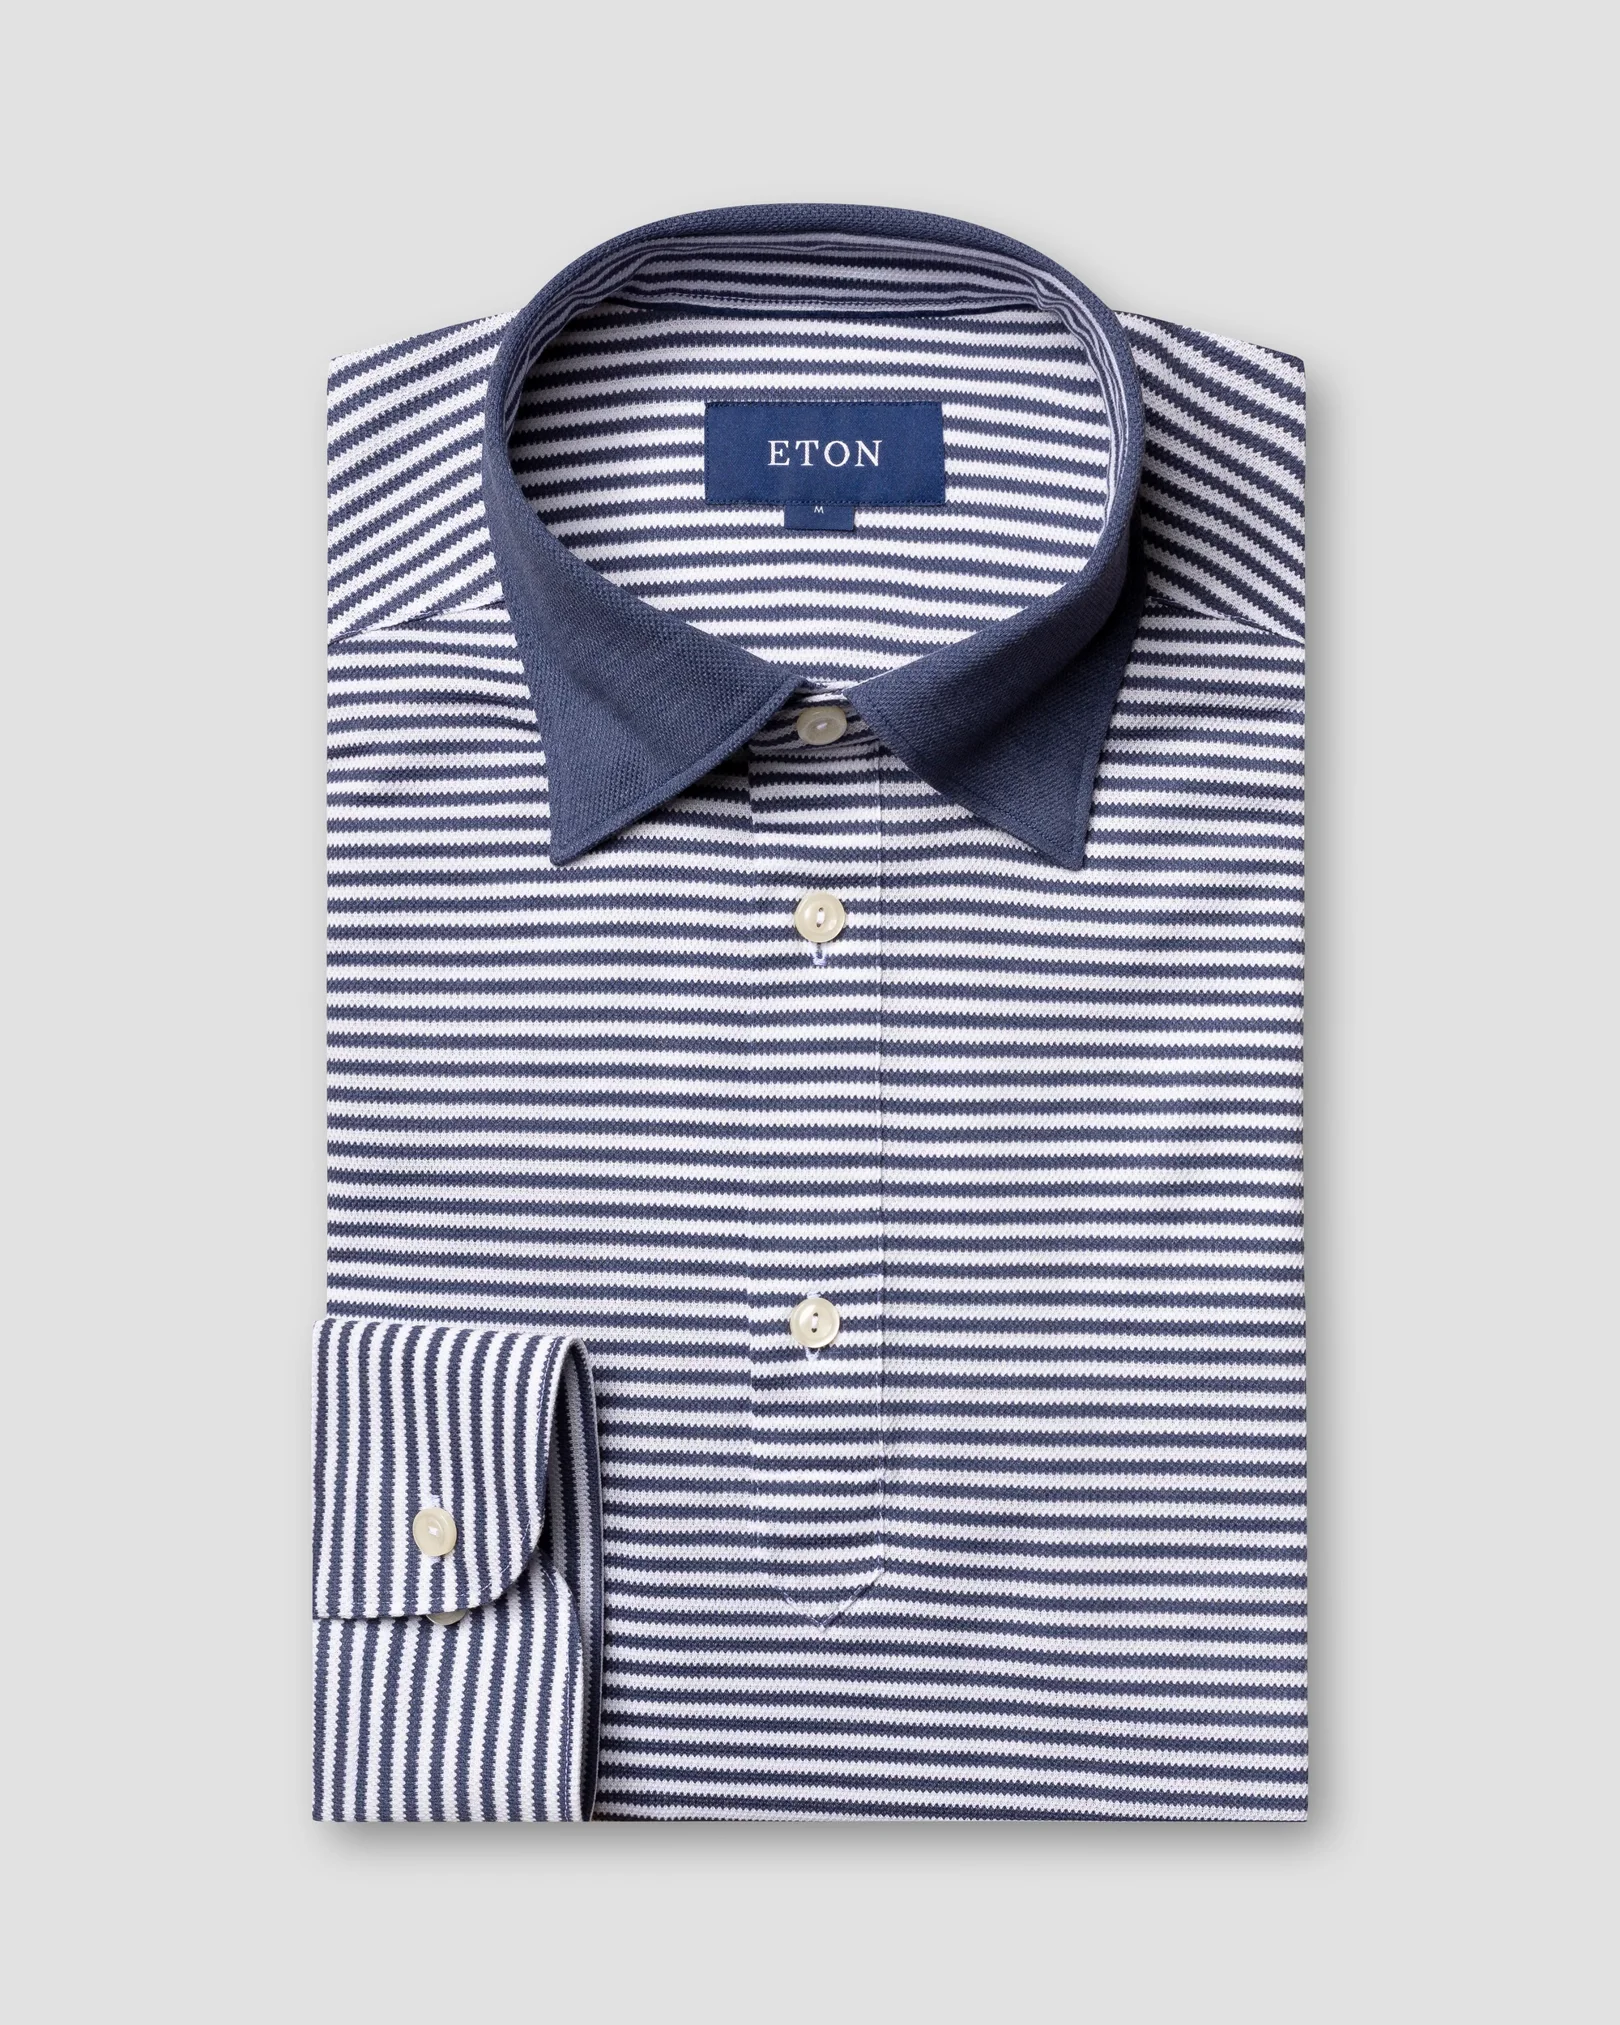 Eton - navy striped polo shirt long sleeved